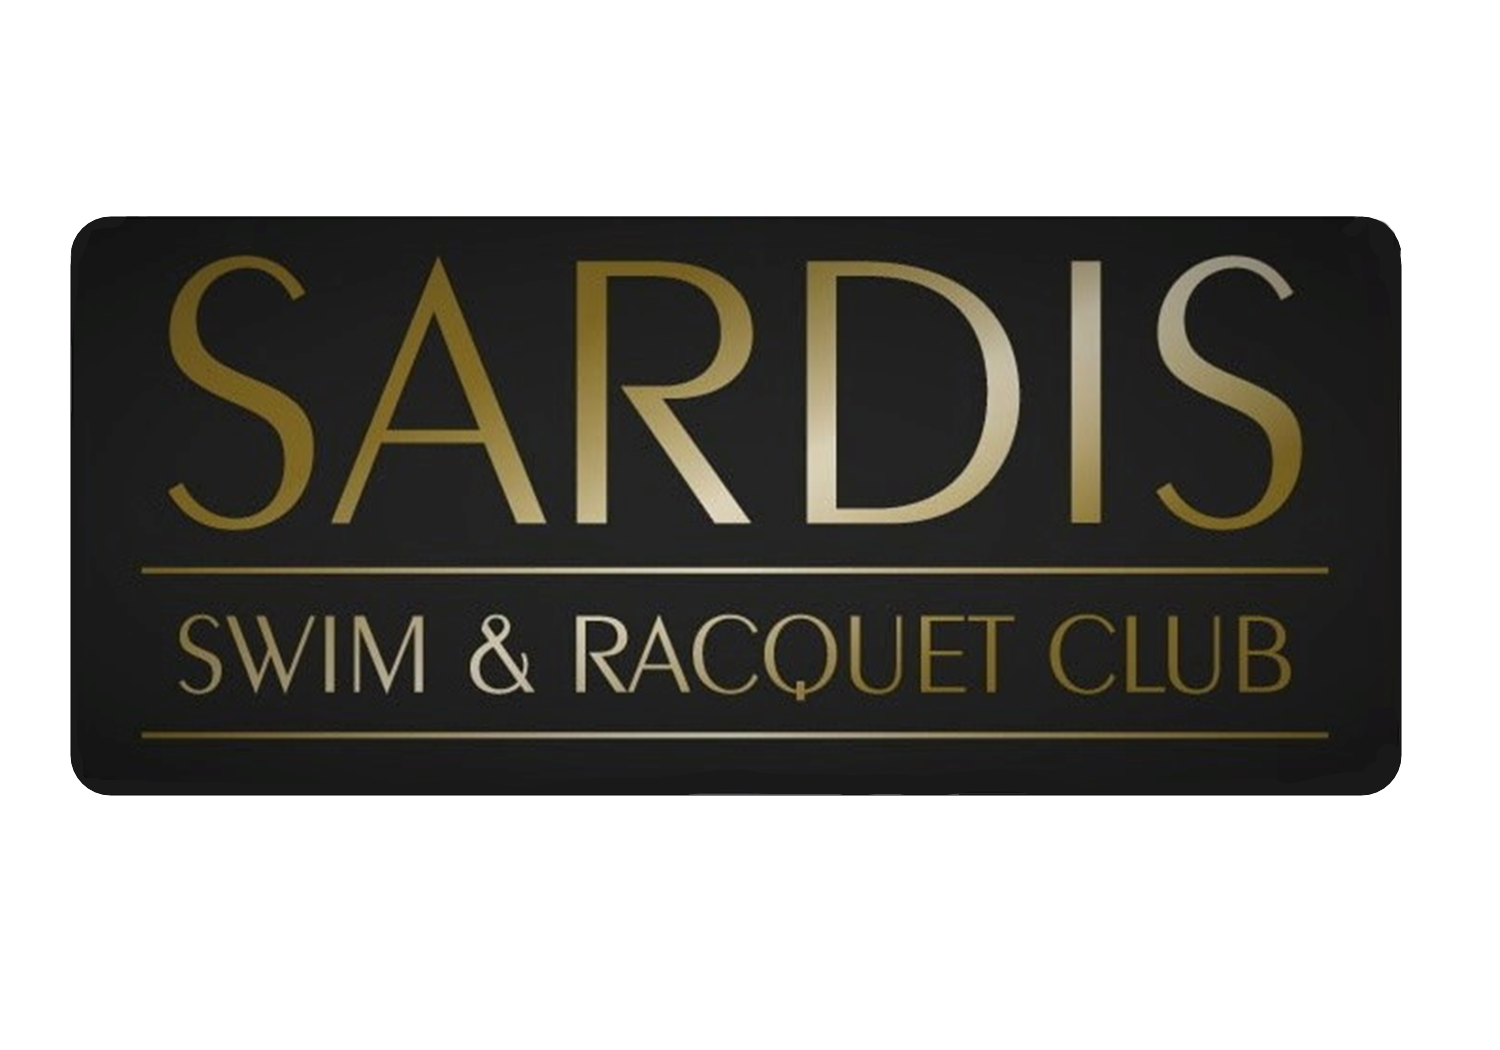 Sardis Swim & Racquet Club